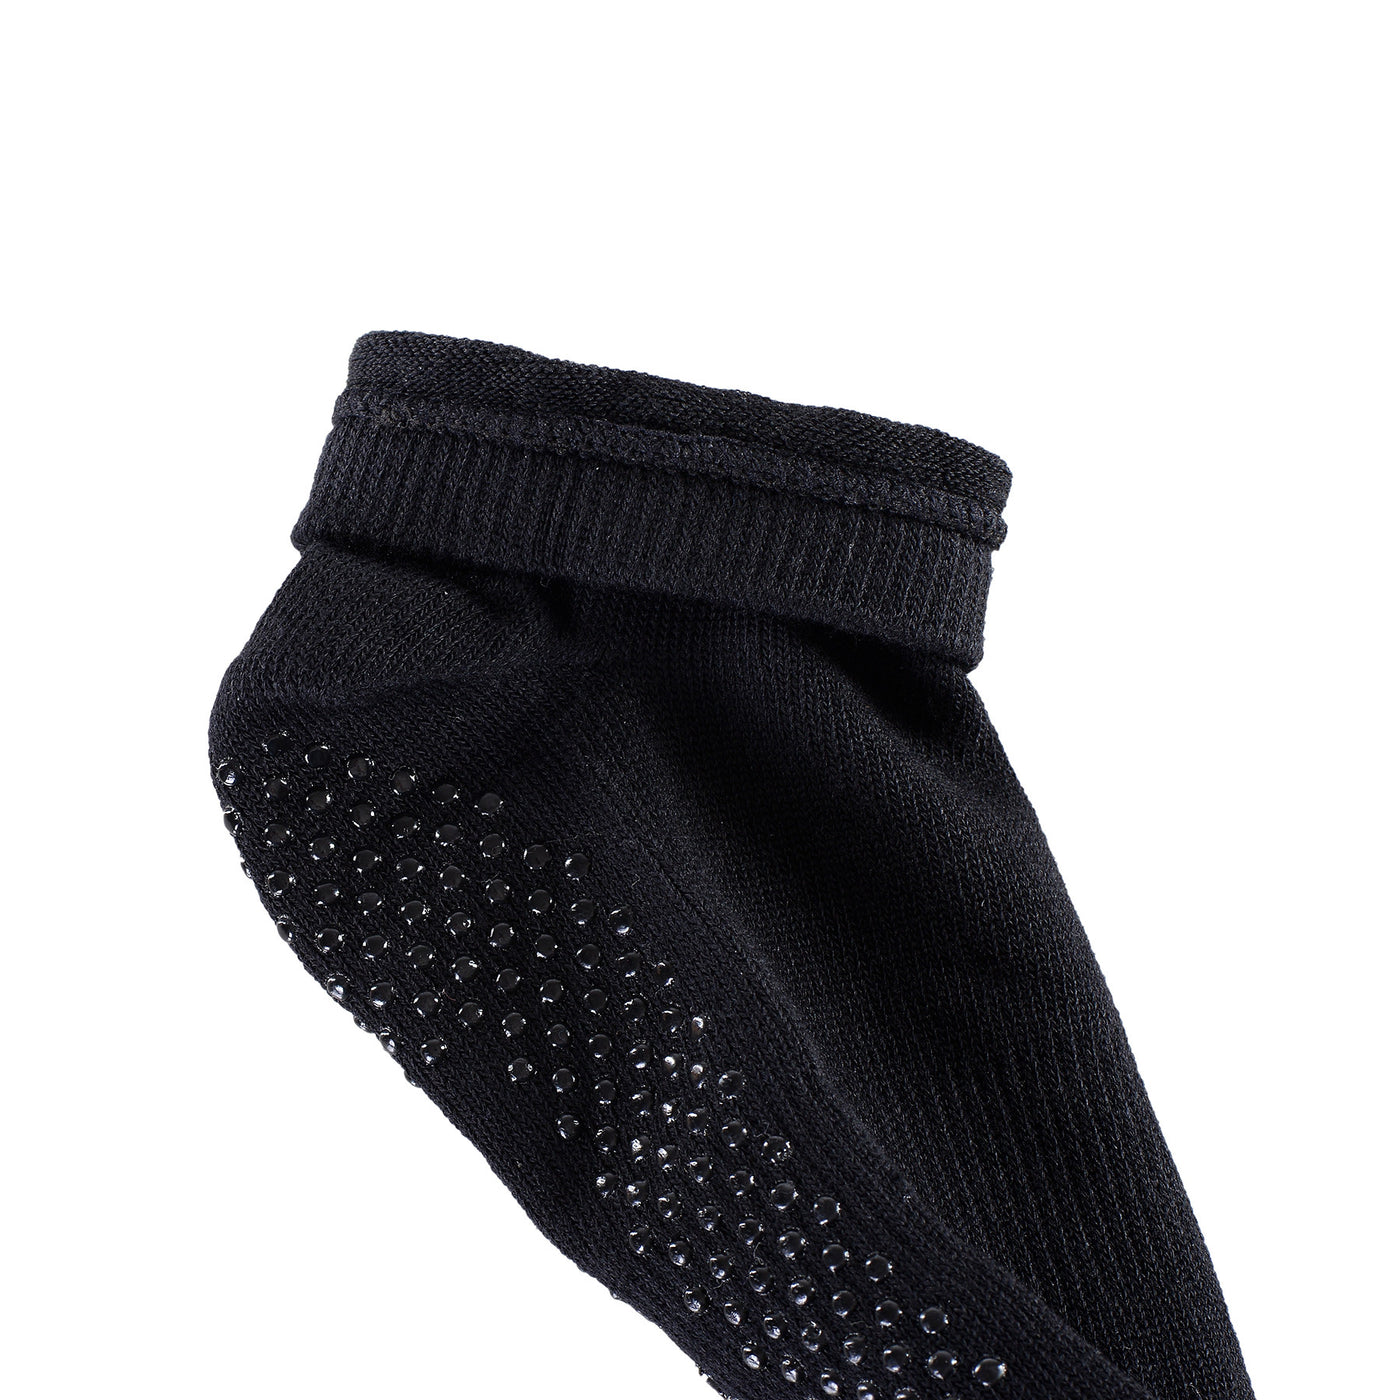 2 Pairs Mens High Quality Professional Anti Slip Five Toes Yoga Socks - Black